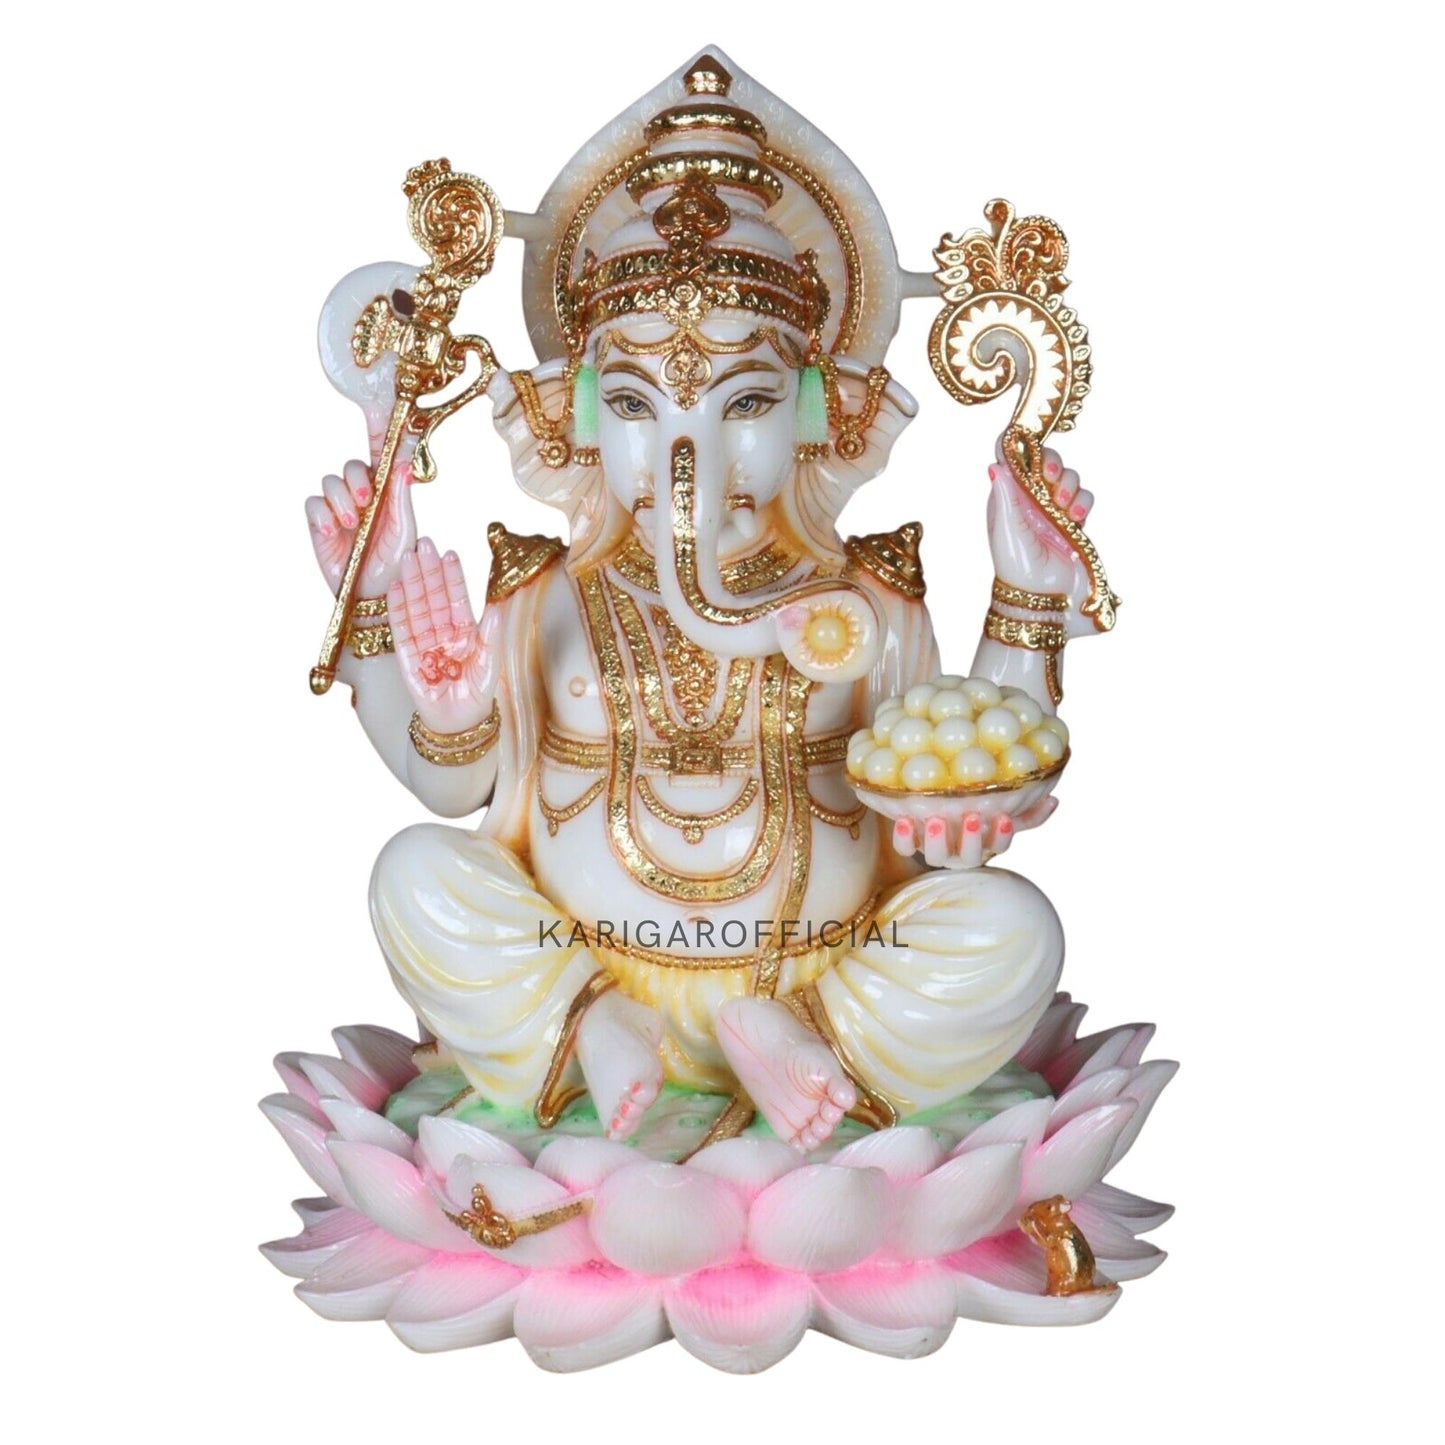 Ganesha Murti Statue Sitting on Lotus flower, Gold Leaf Ganpati Figurine, Large Marble Ganapati Idol Vinayak Deity, Large Indian White Elephant God, Housewarming Gifts Sculpture, (12 inches)